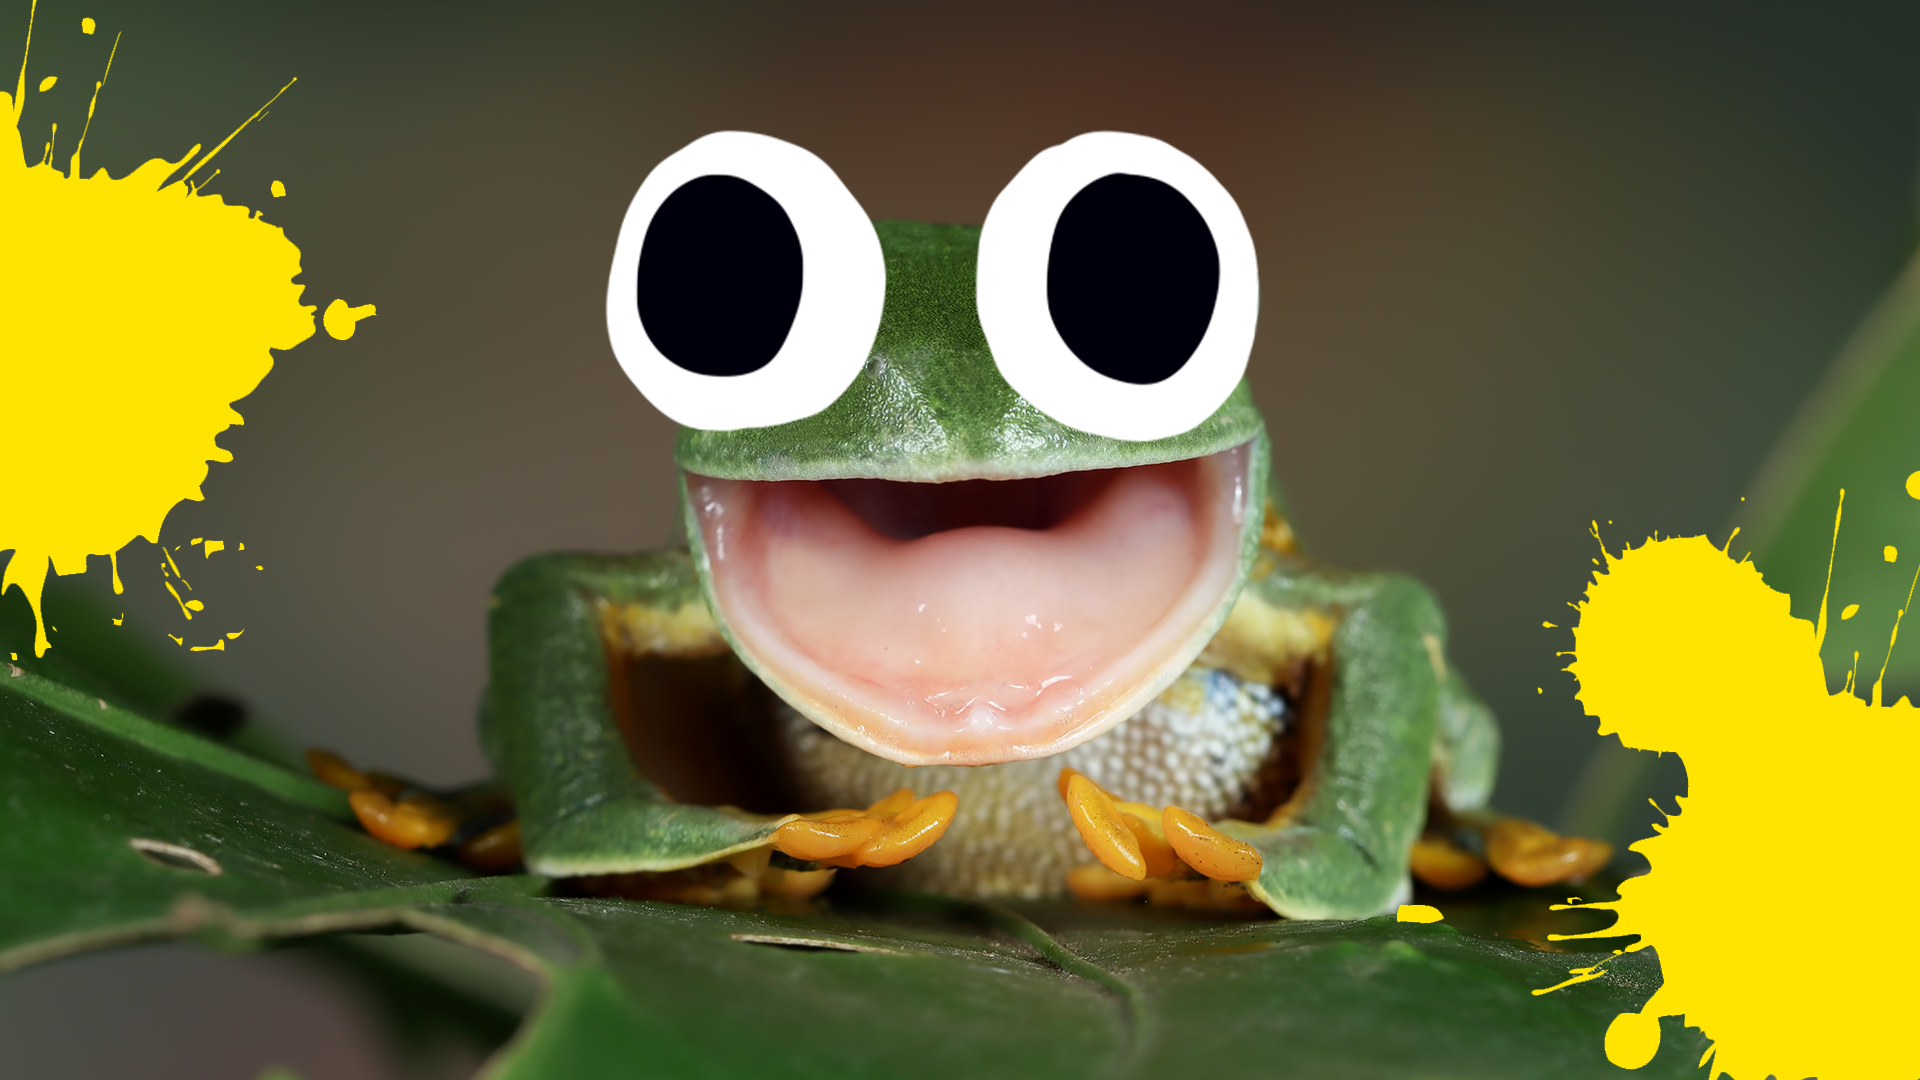 Goofy frog with yellow splats